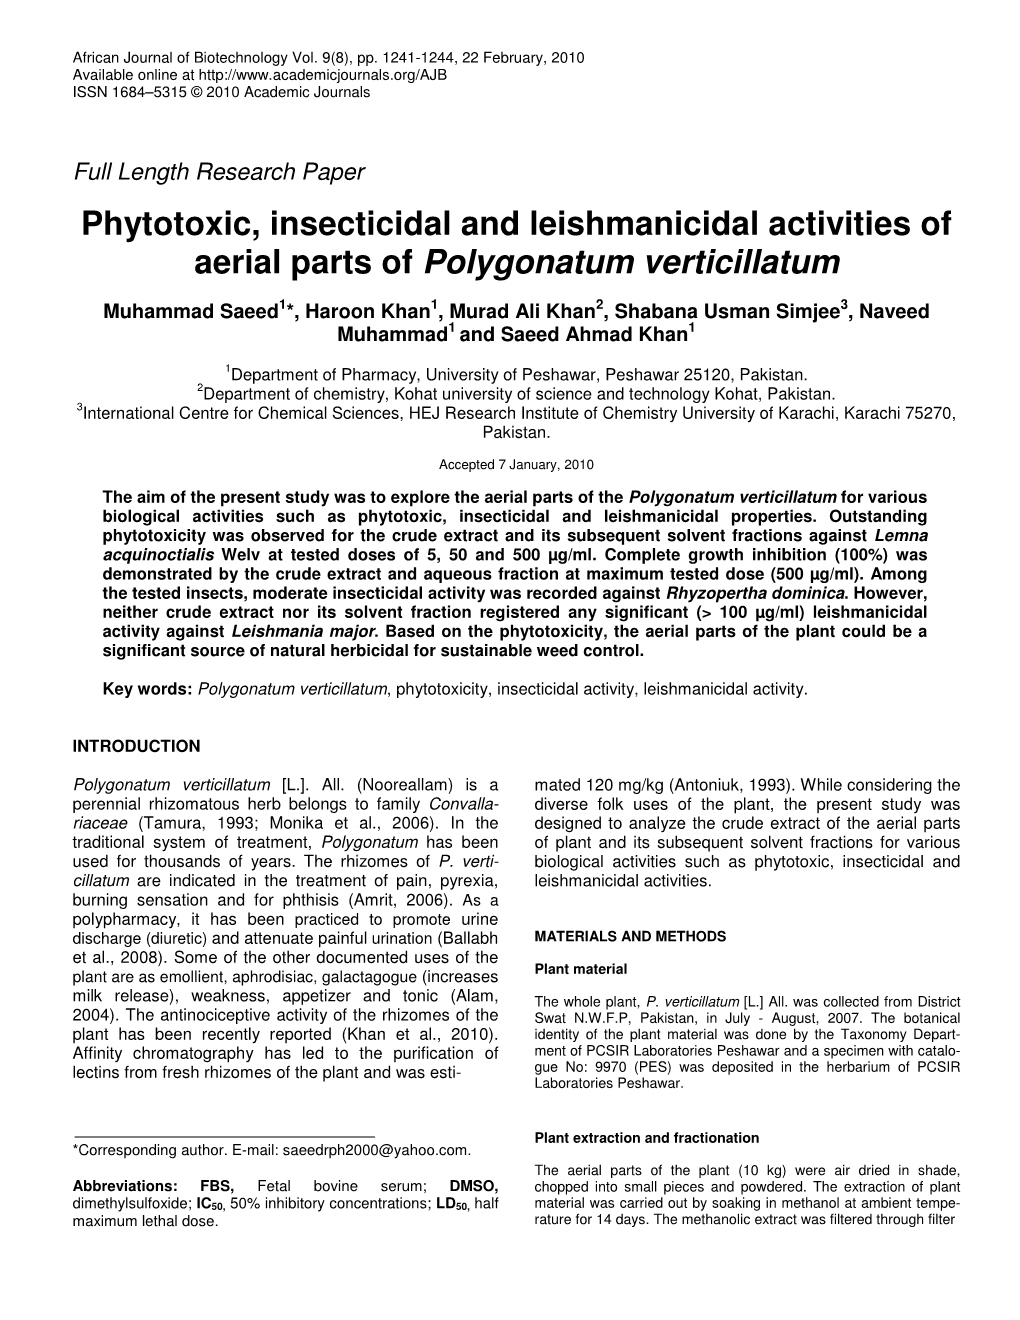 Phytotoxic, Insecticidal and Leishmanicidal Activities of Aerial Parts of Polygonatum Verticillatum